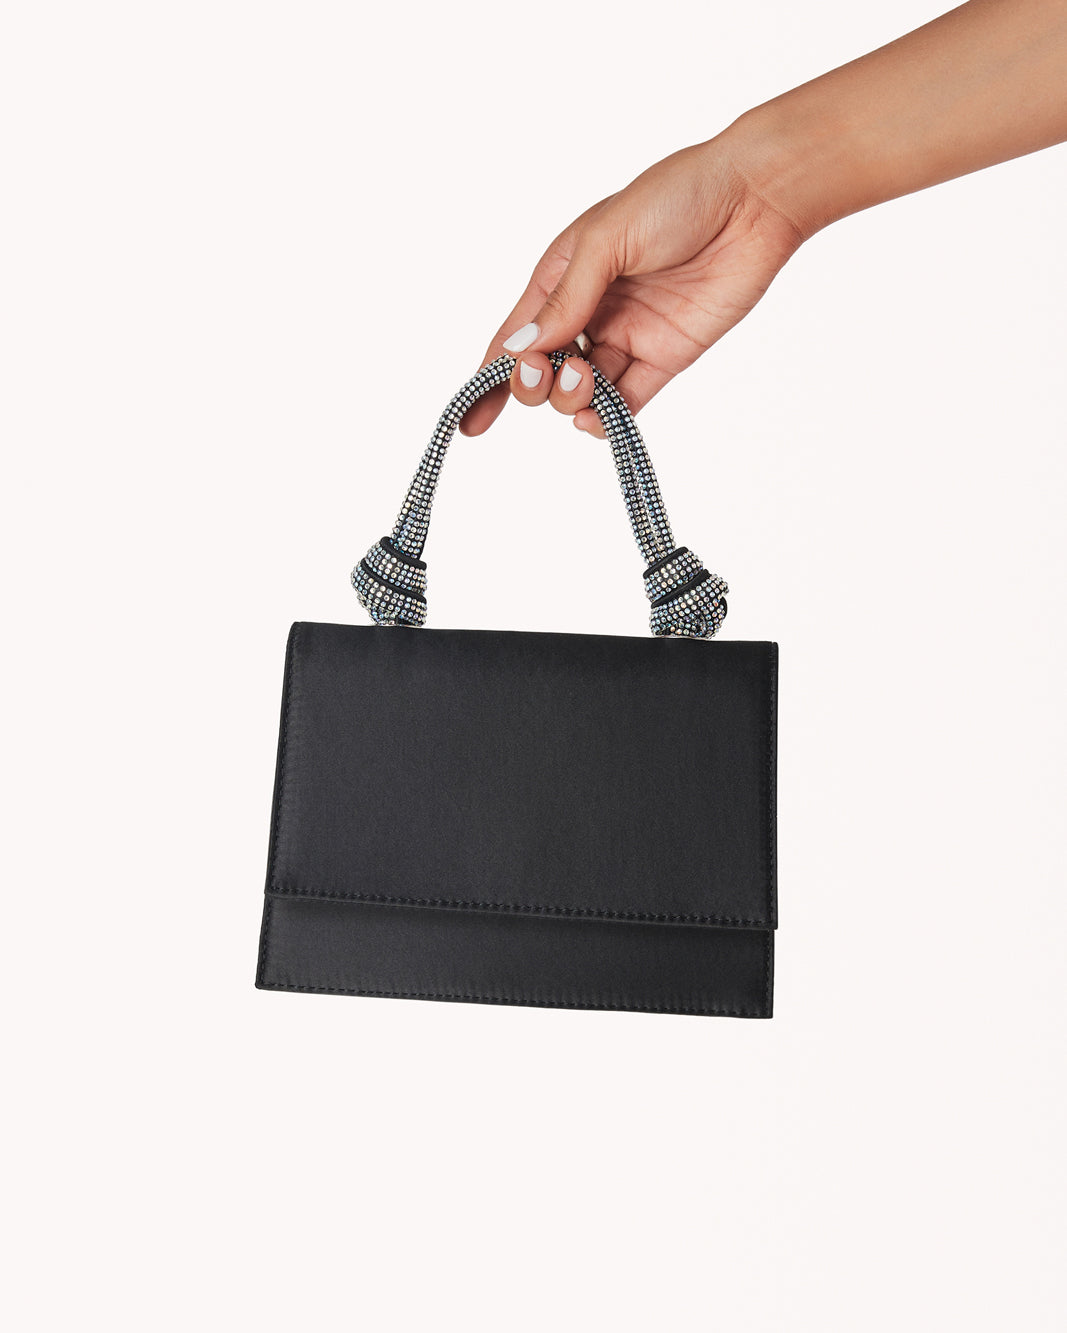 ARIATTA HANDLE BAG - BLACK-SILVER DIAMANTE-Handbags-Billini-O/S-Billini